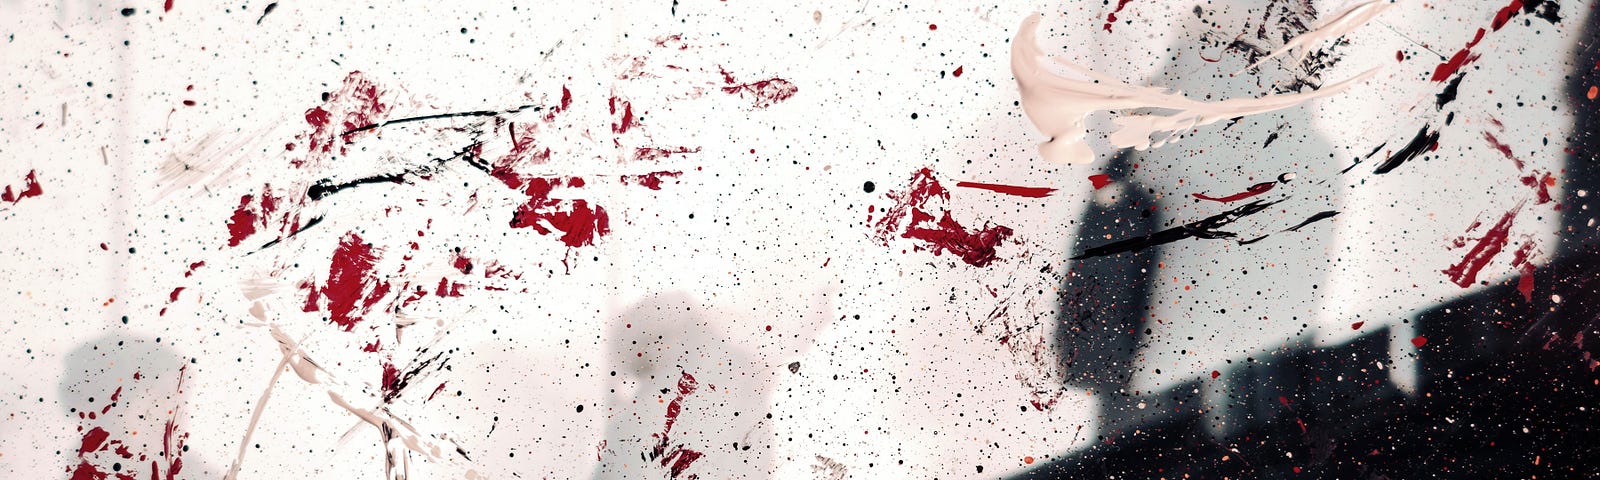 Splashes of blood. Photo by Jr Korpa on Unsplash